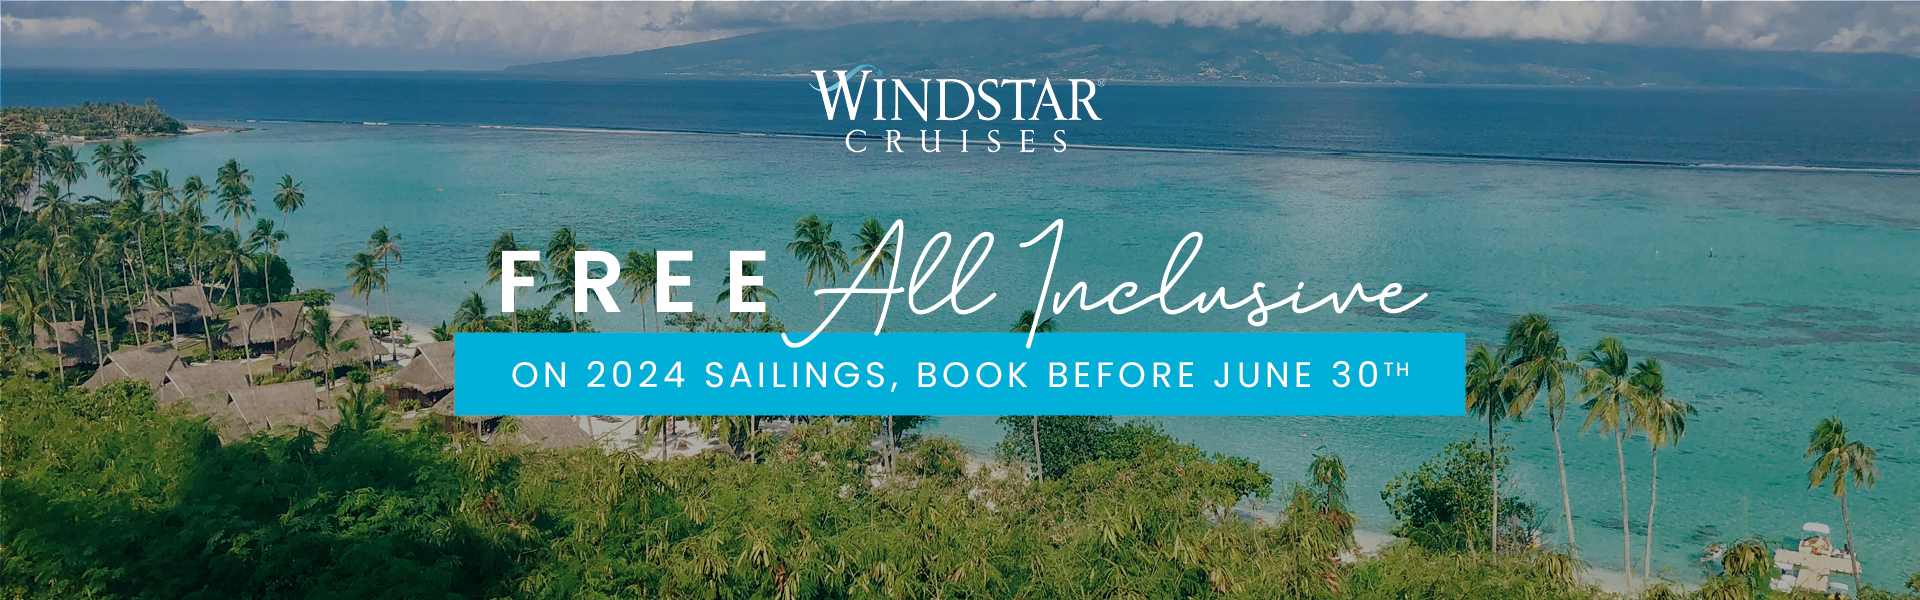 Windstar Cruises - Huge Savings